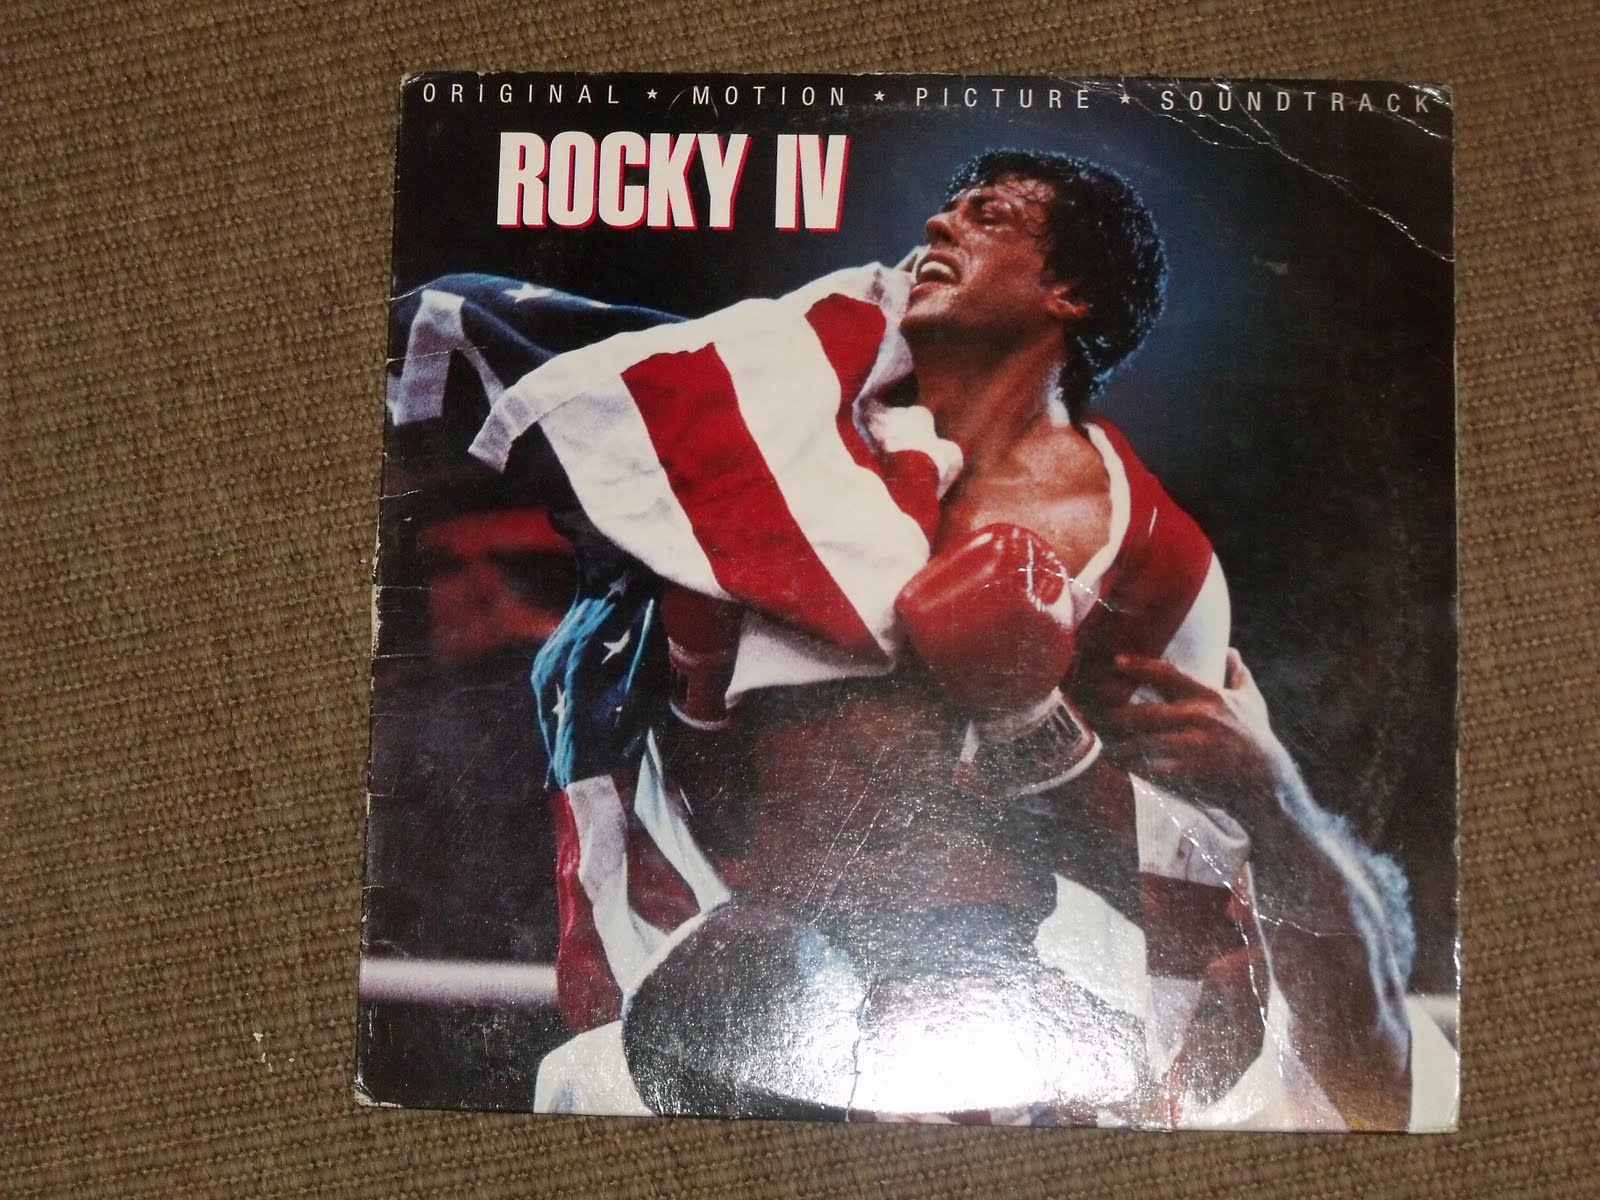 Rocky OST LP 45. Rocky IV - Original Motion picture Soundtrack. Vince Dicola - only time will tell - 2021. Soundtrack - Rocky IV 2lp.